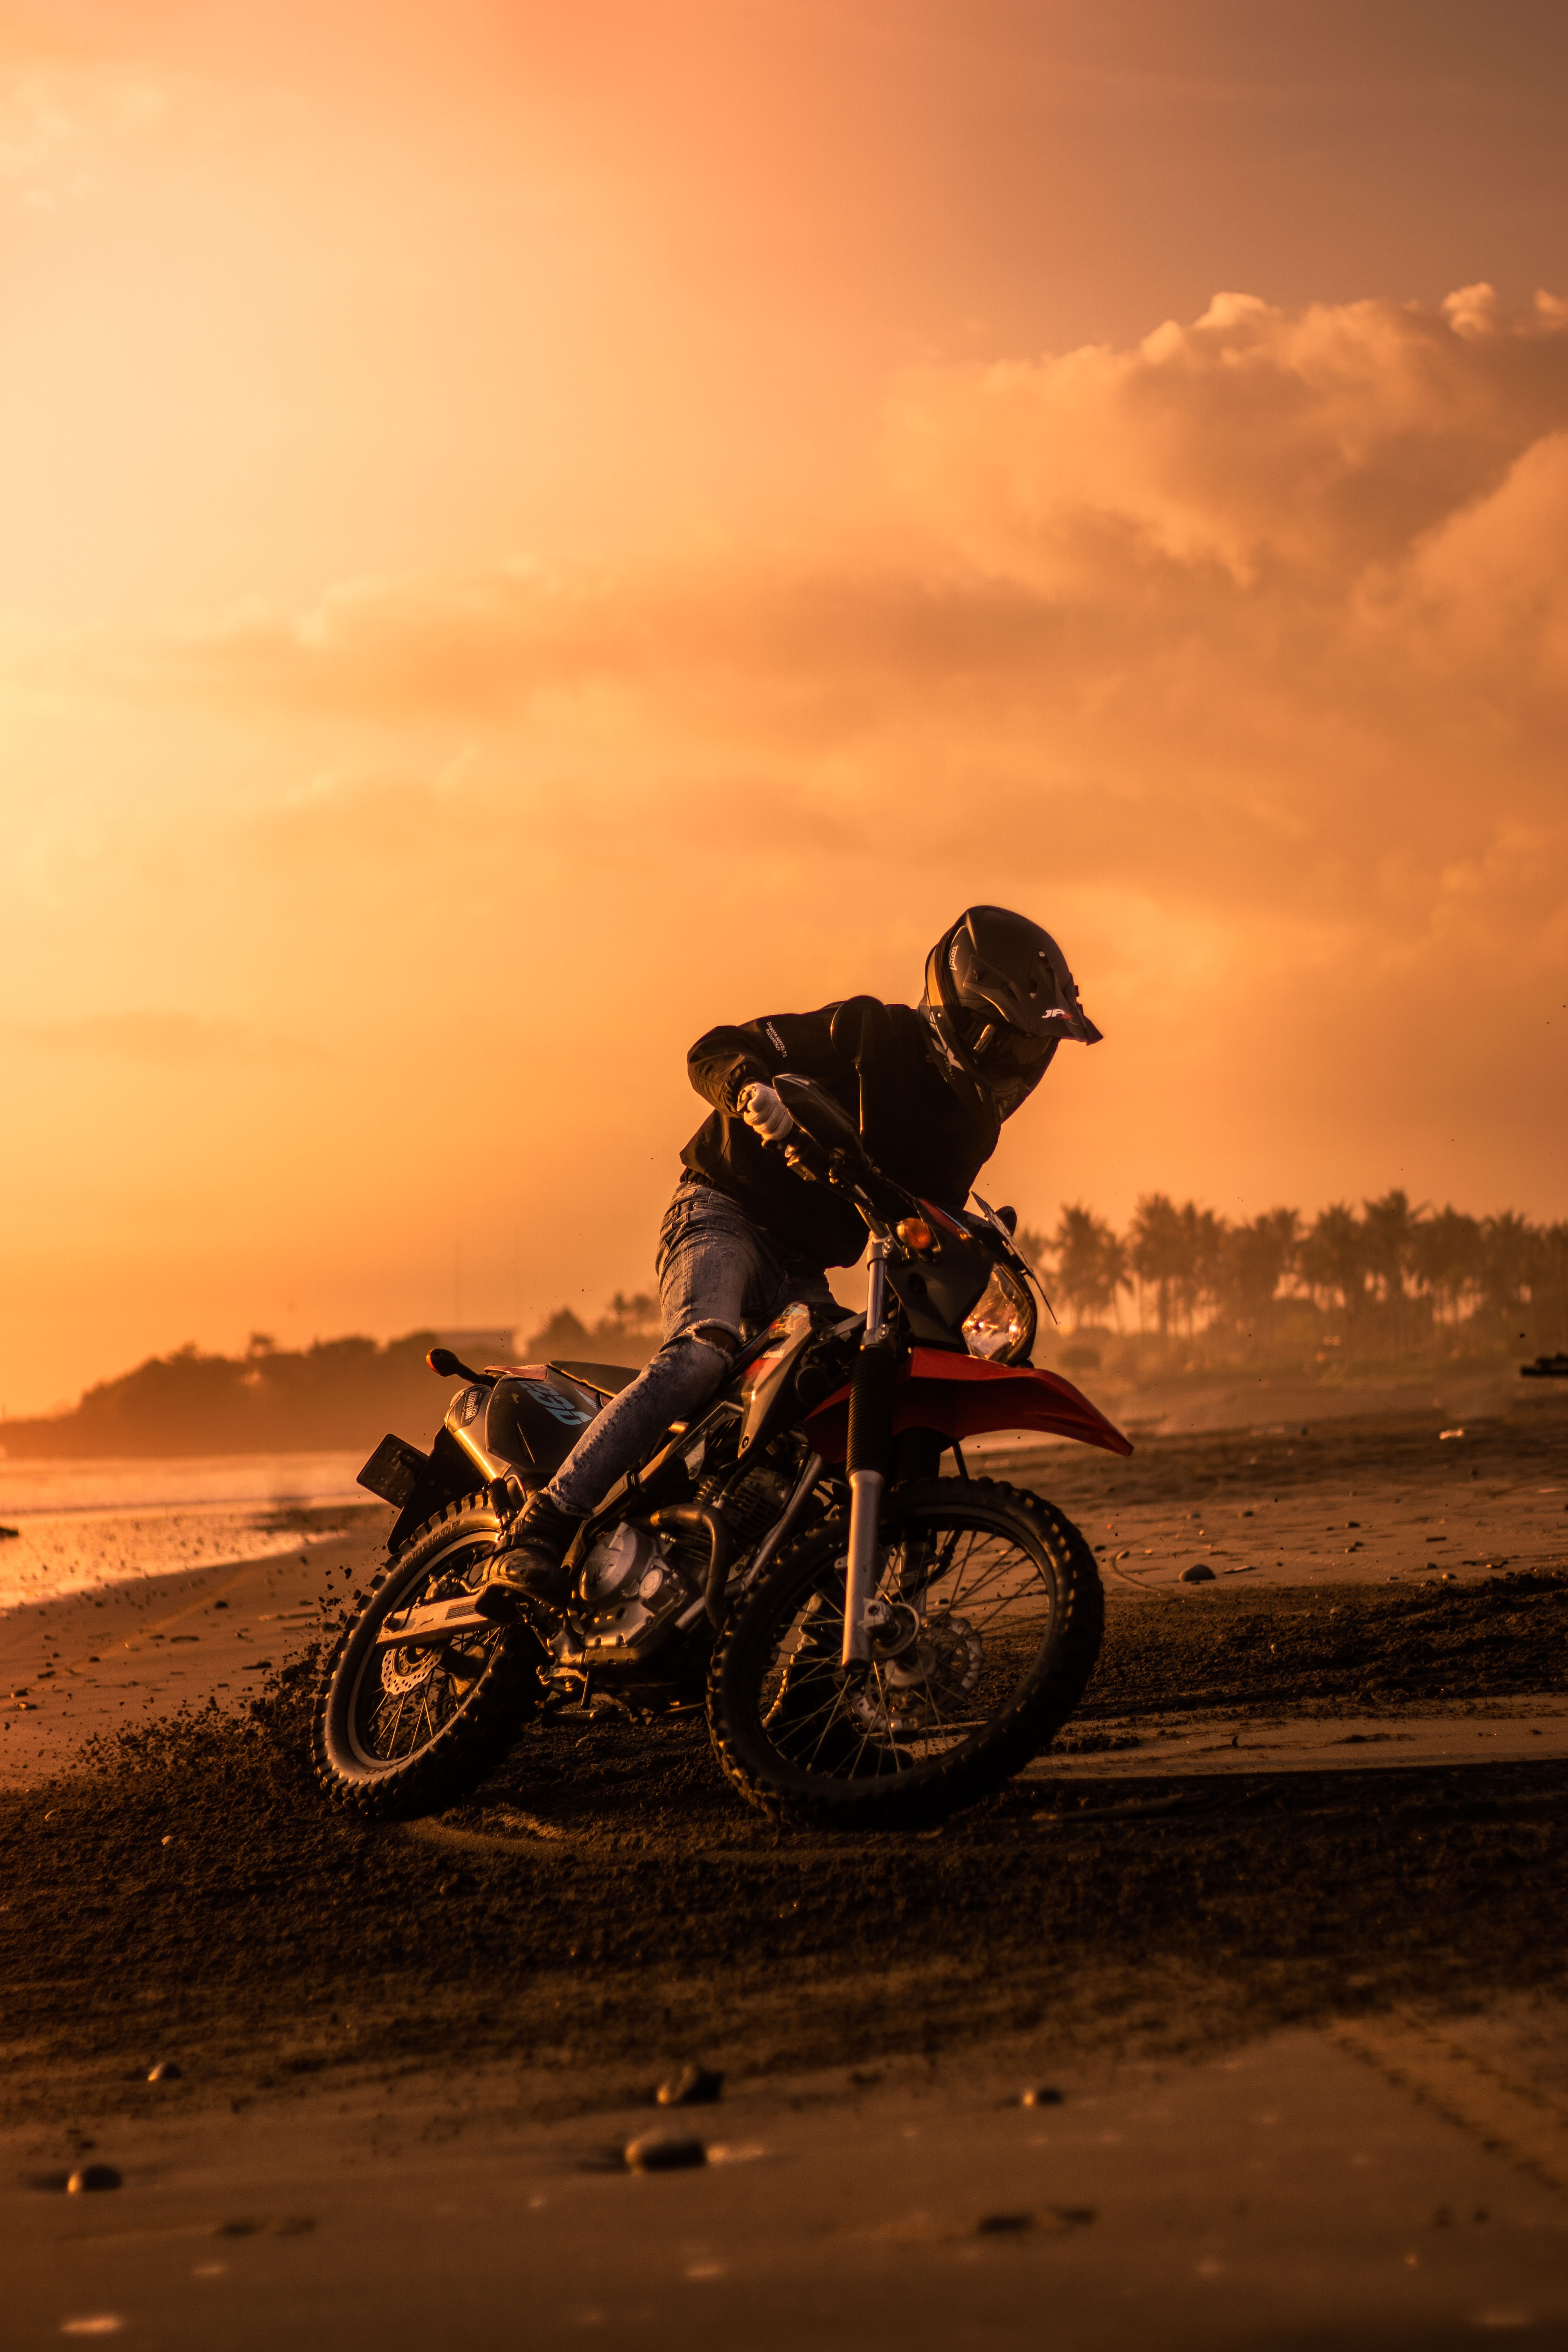 122139 descargar imagen cruz, playa, motocicletas, motociclista, motocicleta, bicicleta, cruzar: fondos de pantalla y protectores de pantalla gratis